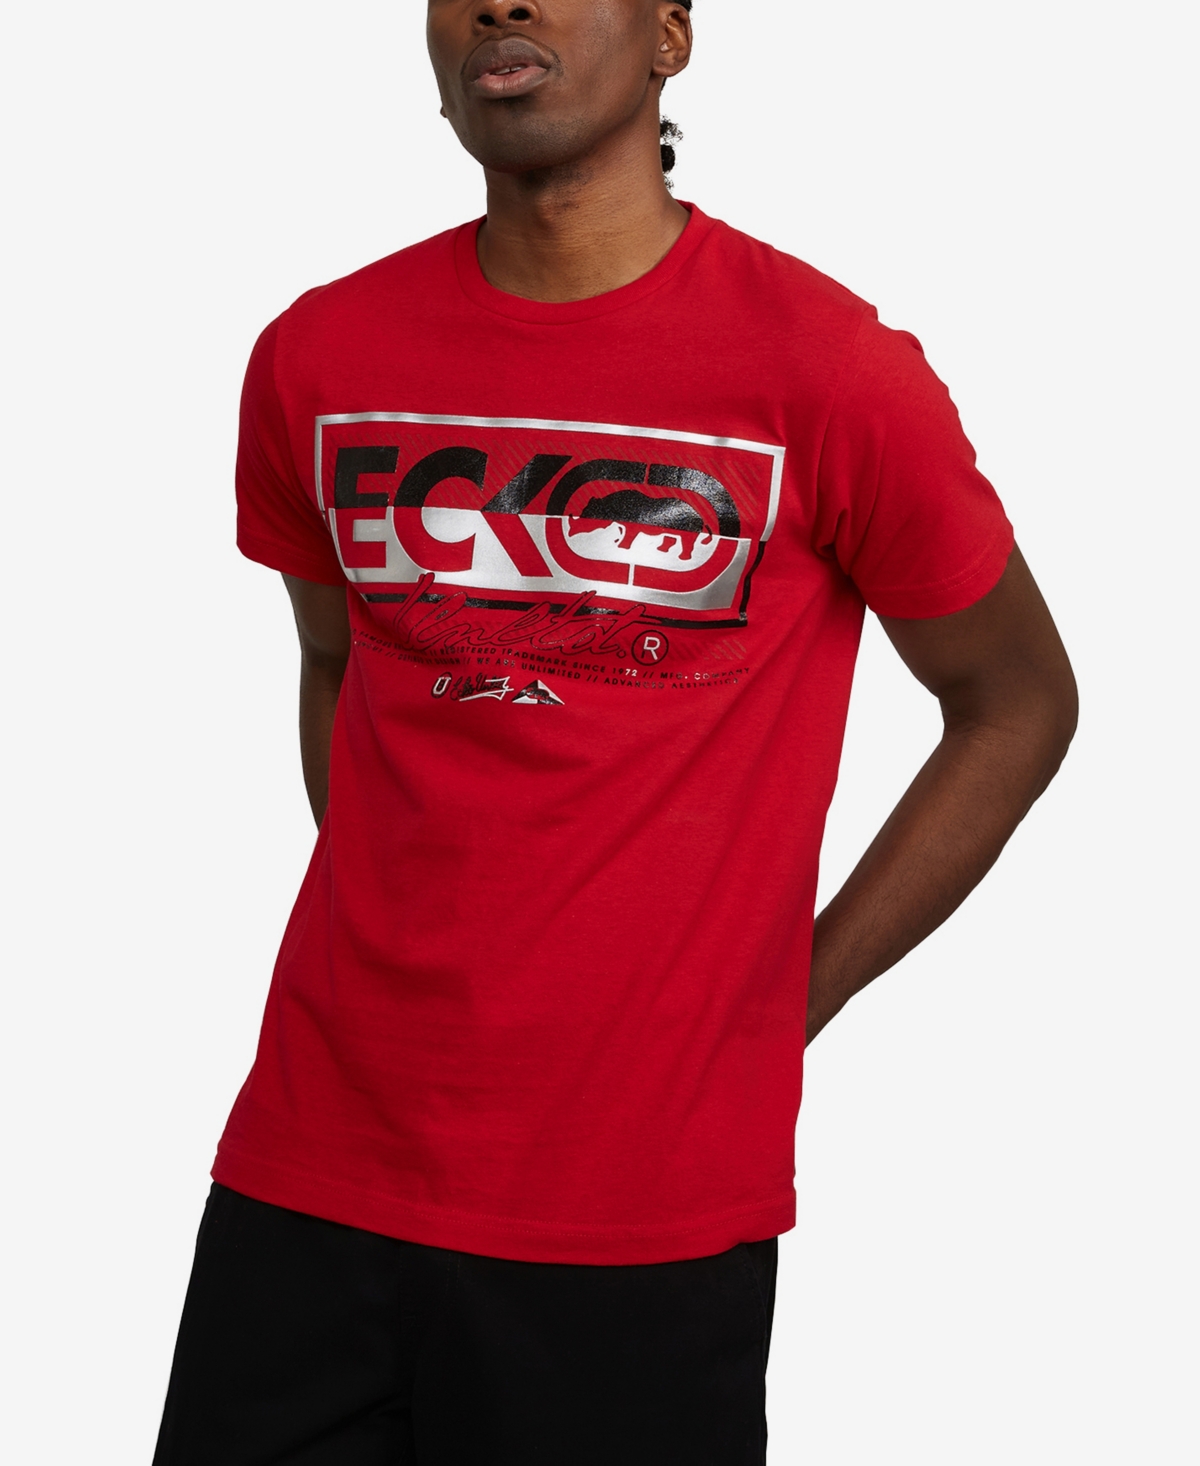 Ecko Unltd Men's Broadband Graphic T-shirt